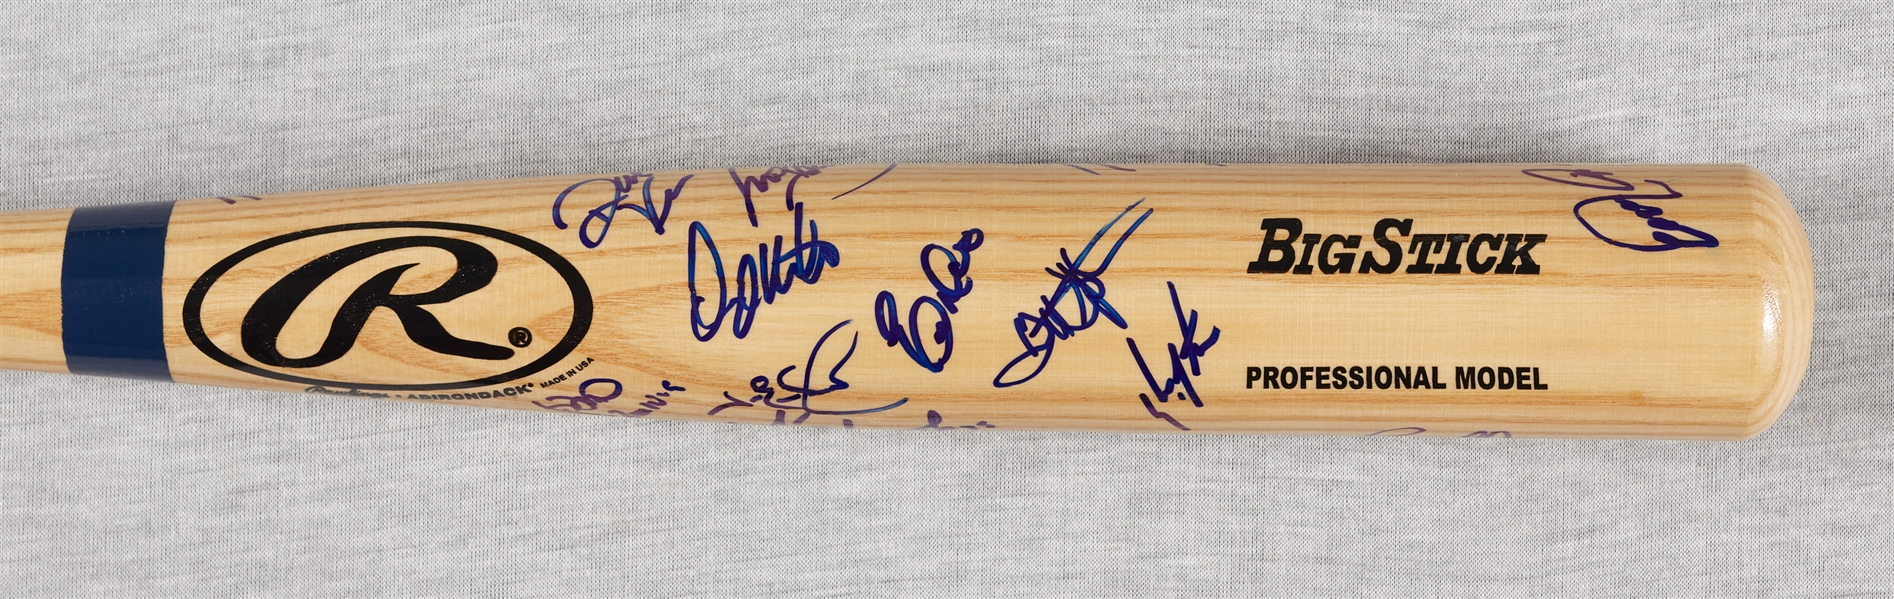 2000 St. Louis Cardinals NL Champs Team-Signed Rawlings Bat